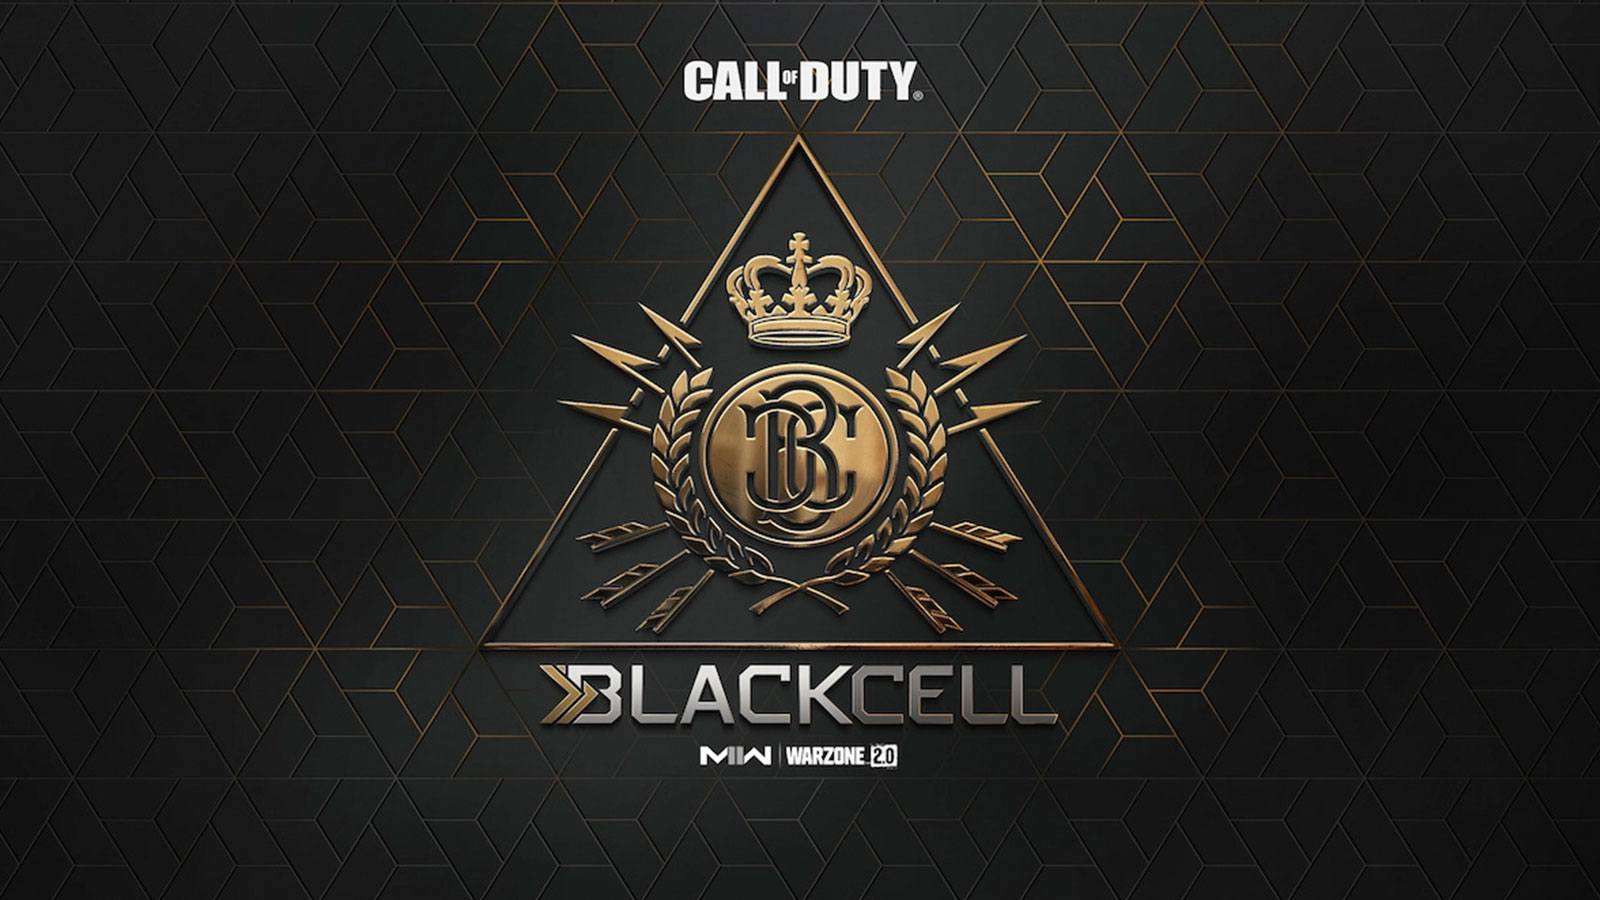 BlackCell MW2 et Warzone 2